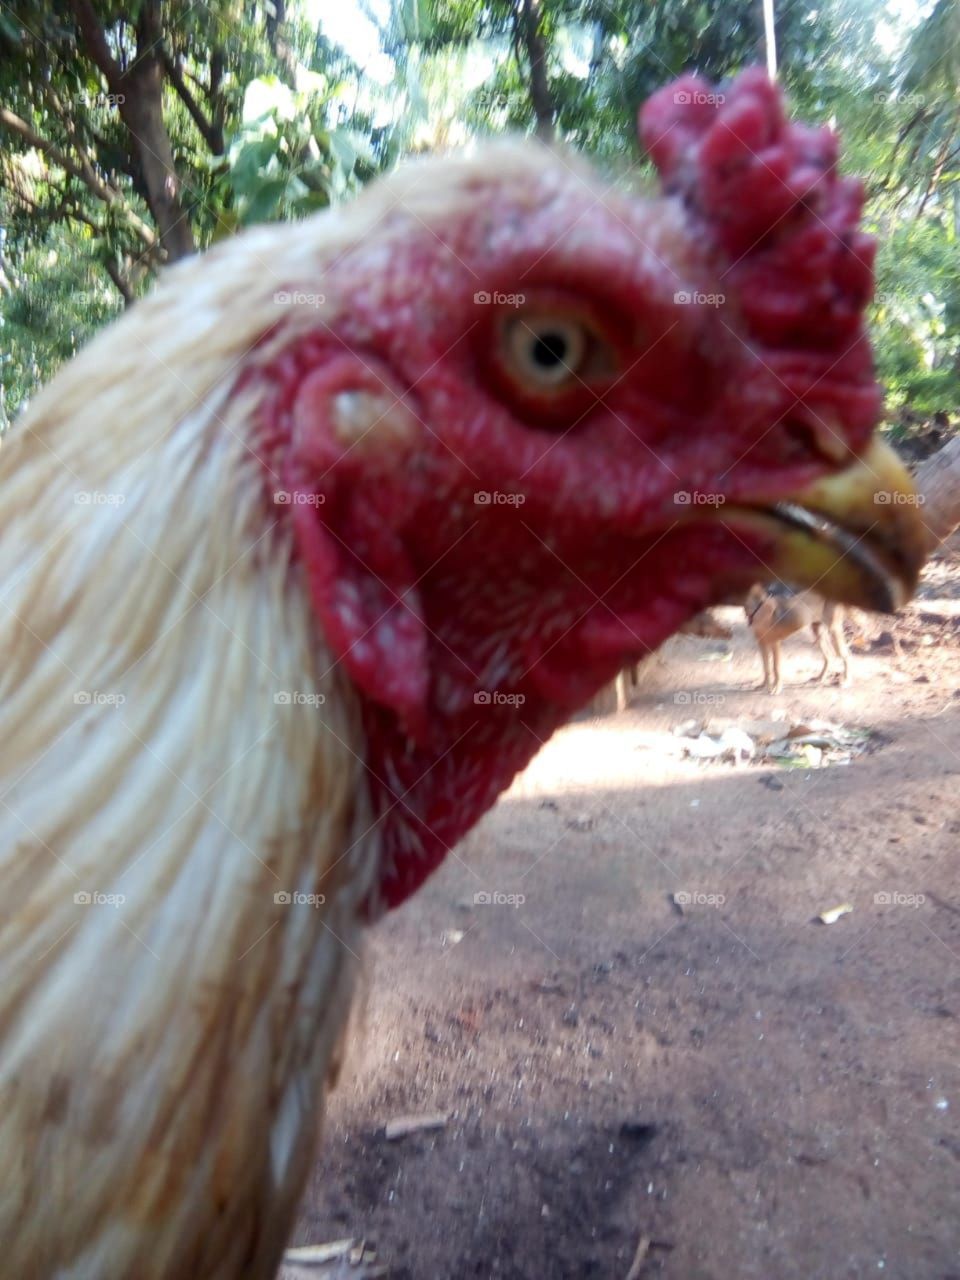 My country bird hen